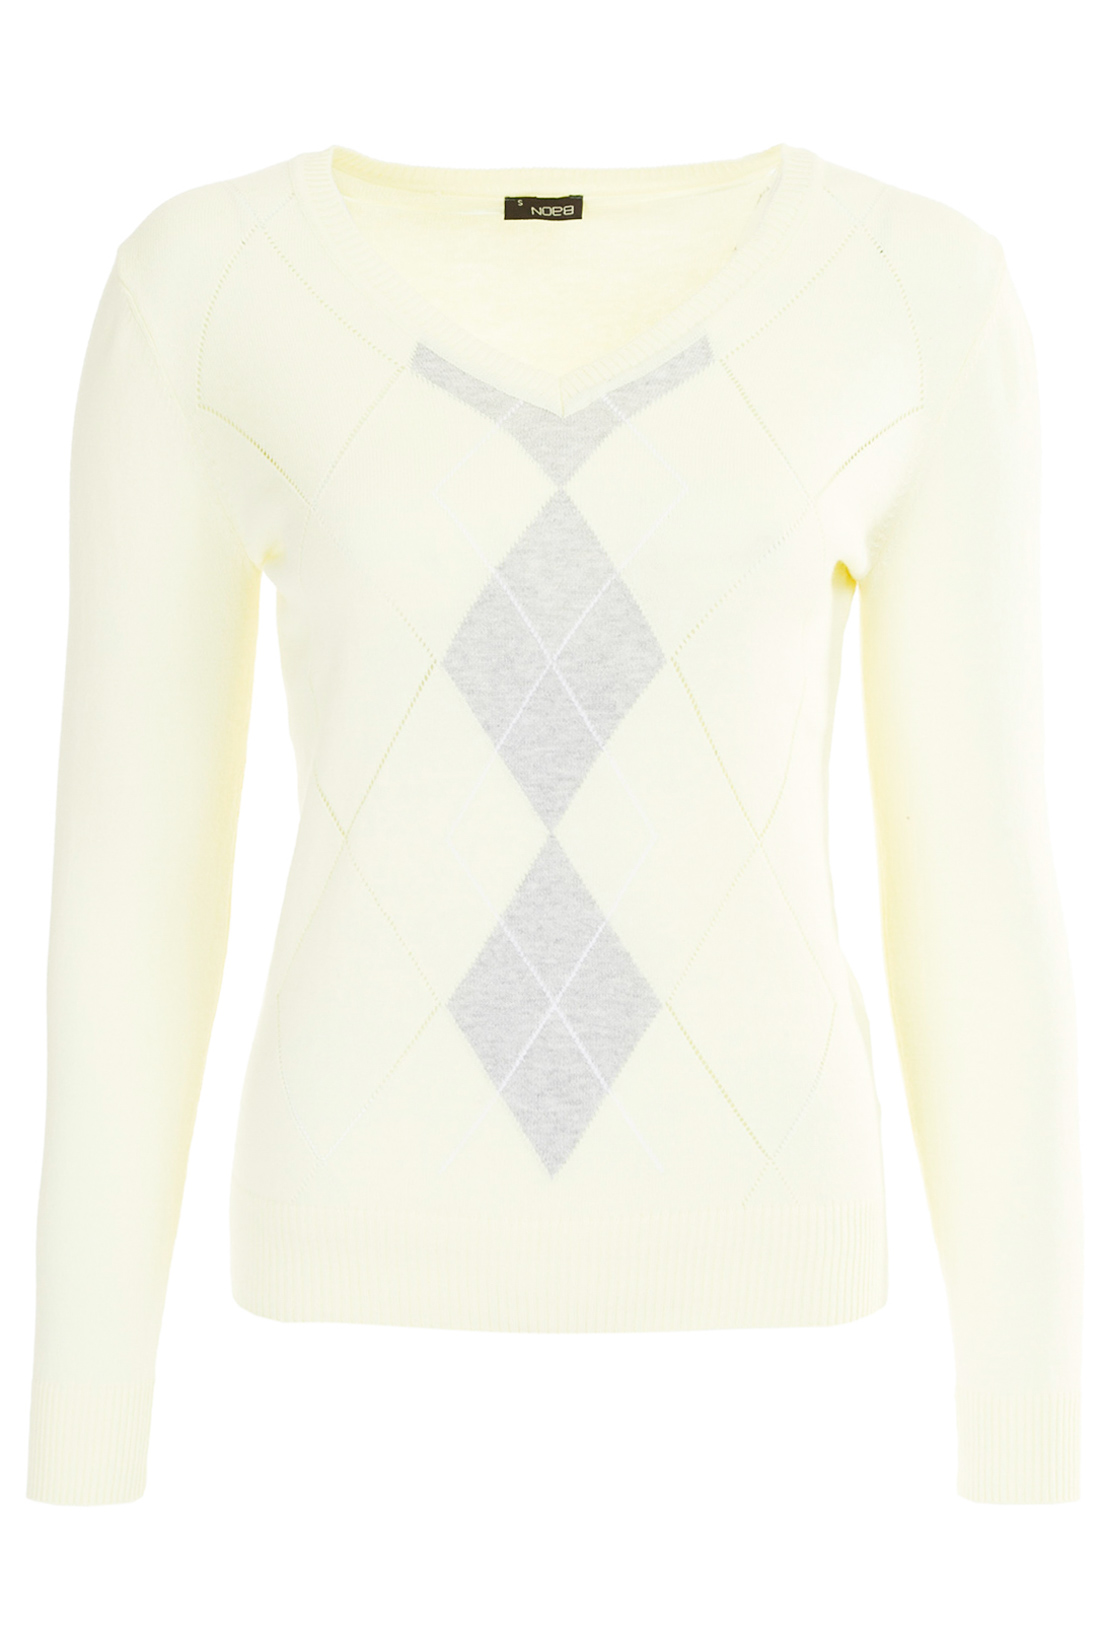 Базовый пуловер с ромбами (арт. baon B137204), размер L, цвет белый Базовый пуловер с ромбами (арт. baon B137204) - фото 5